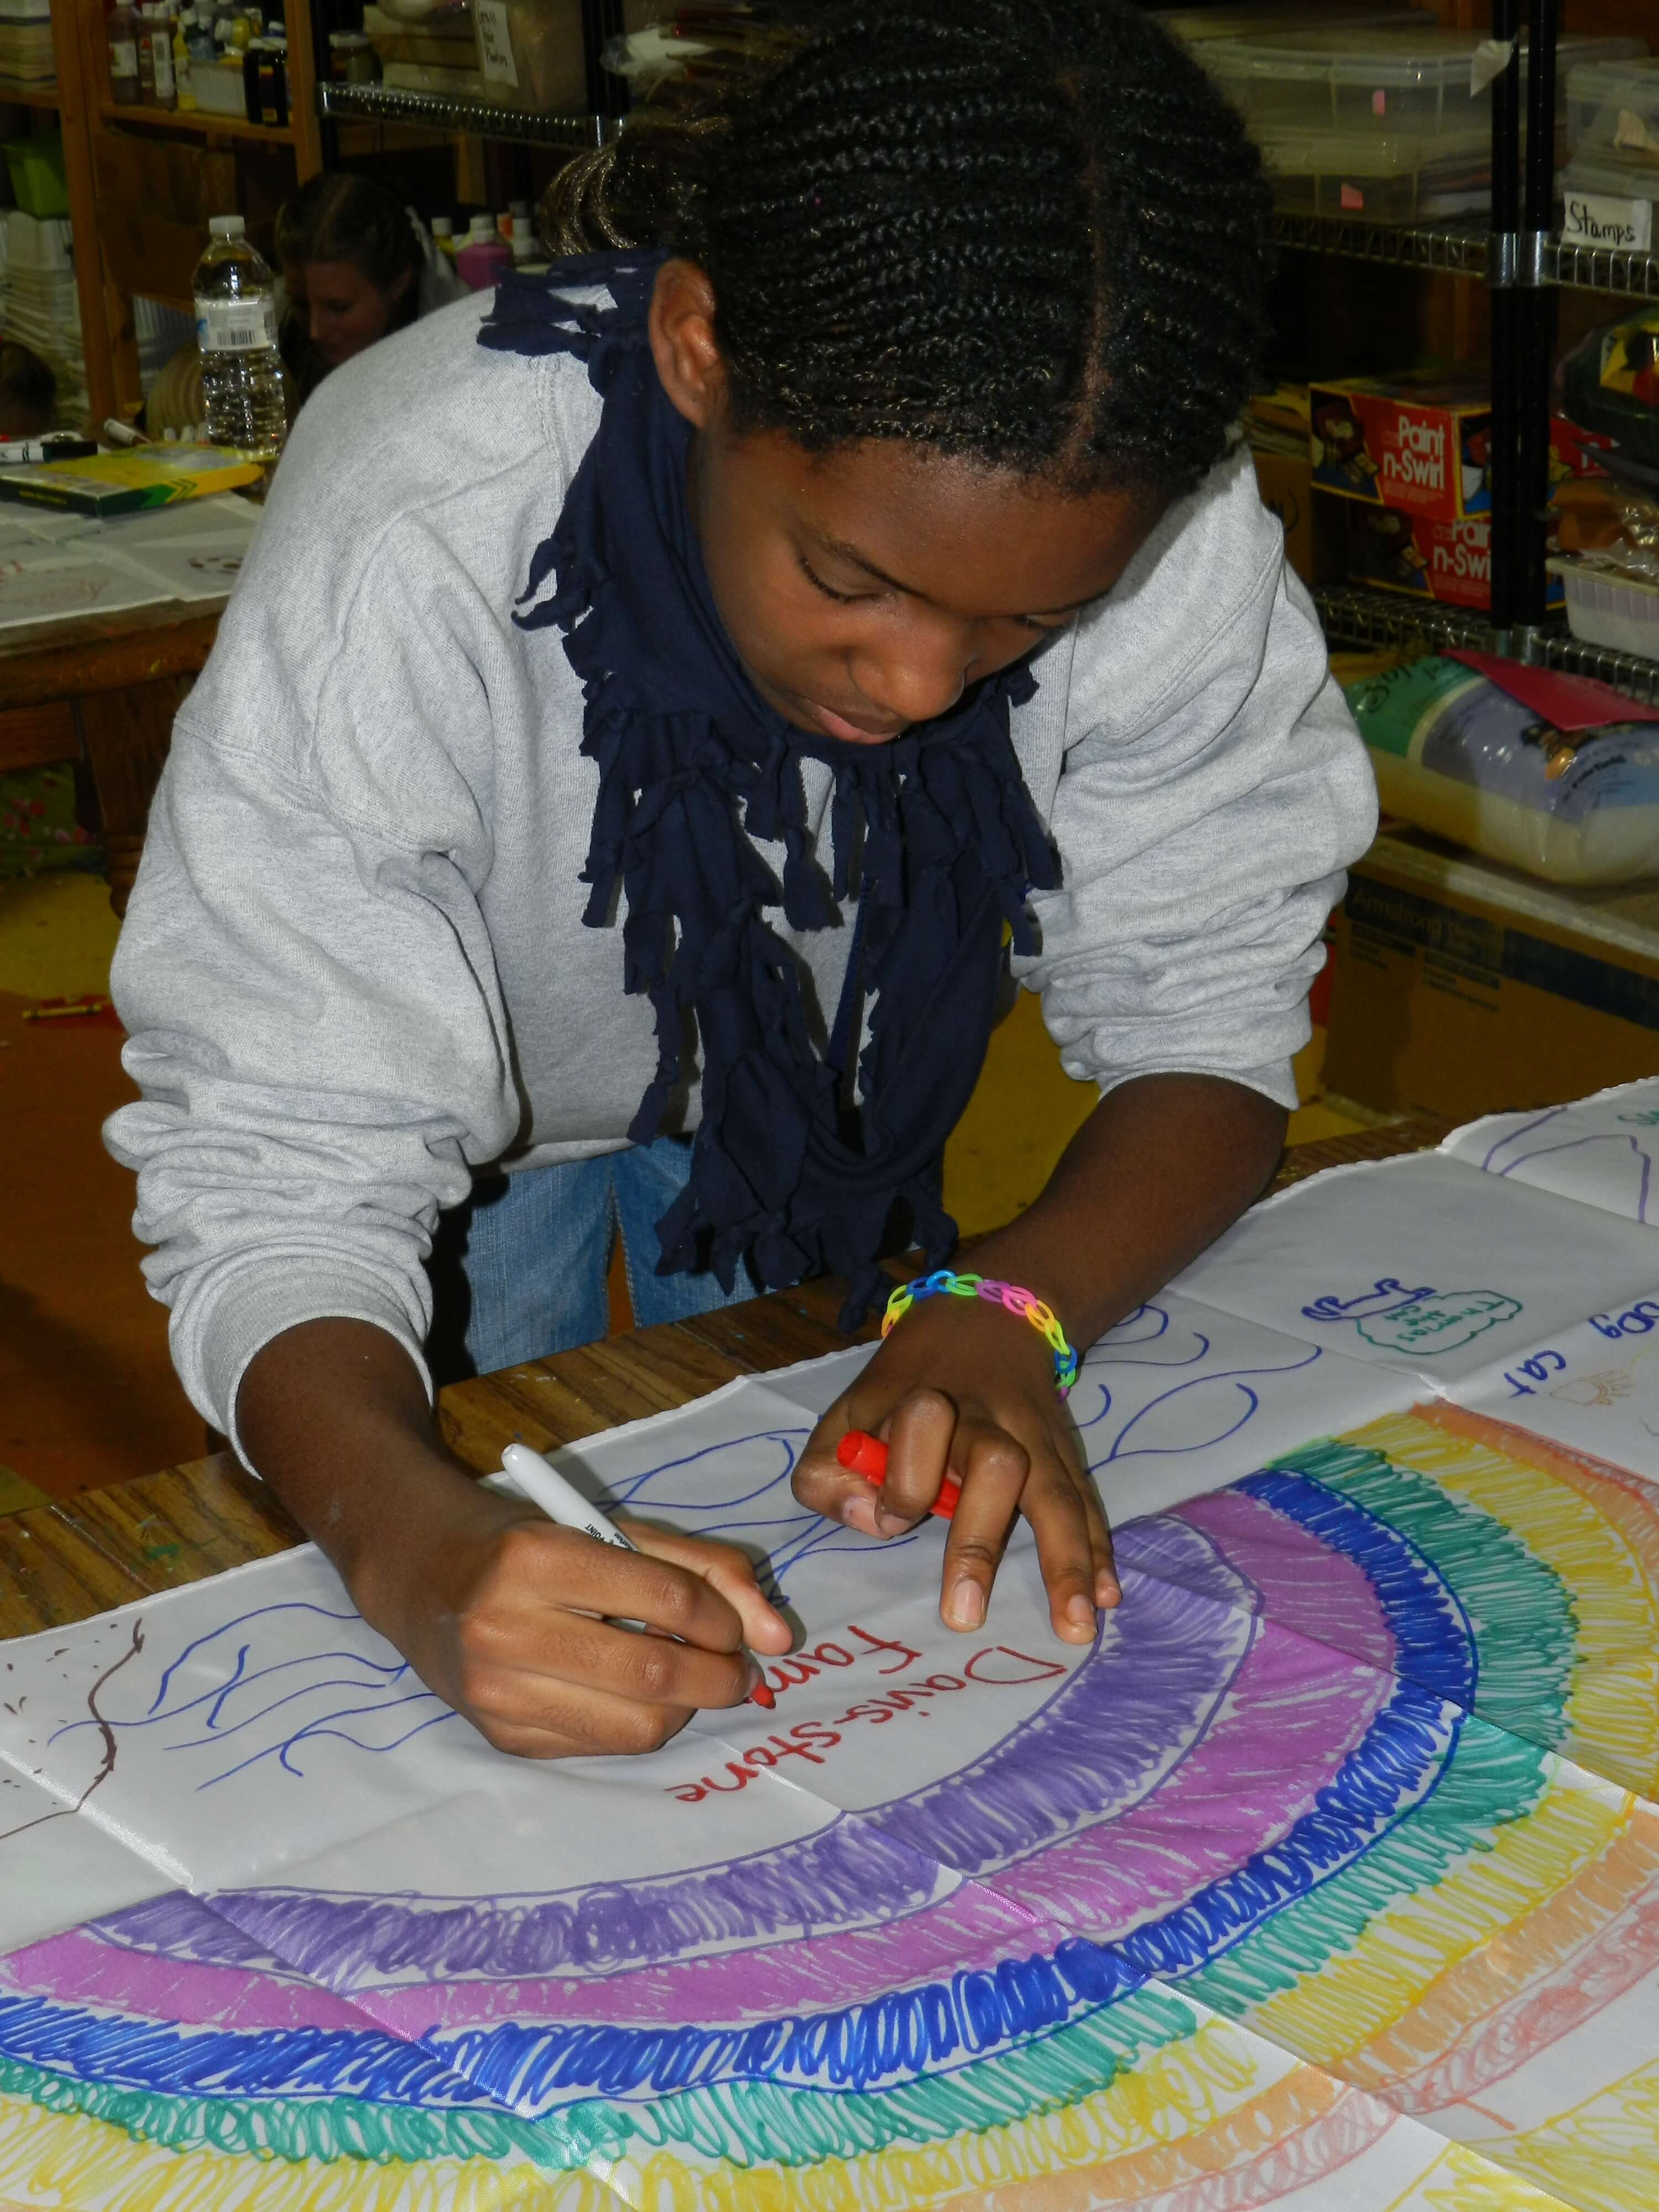 Children work on making family banners